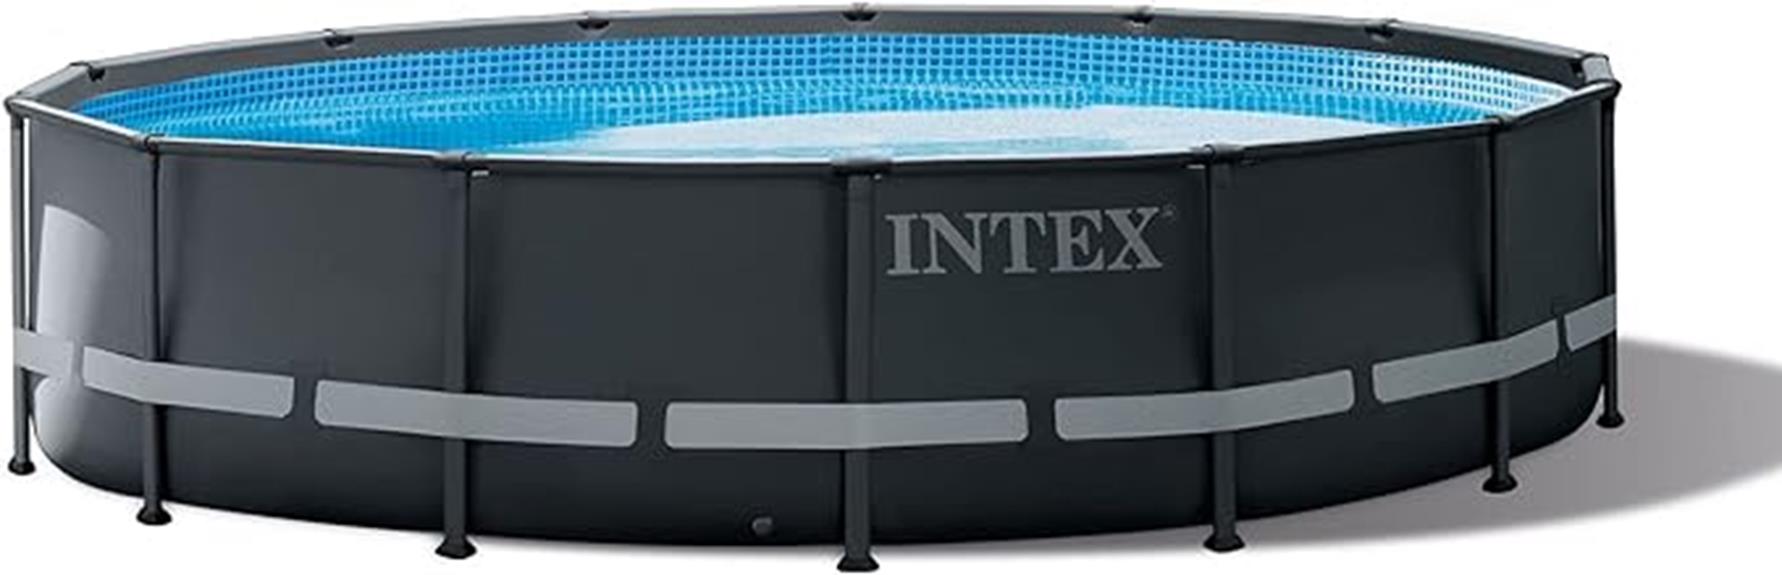 intex 14x42 round swimming pool